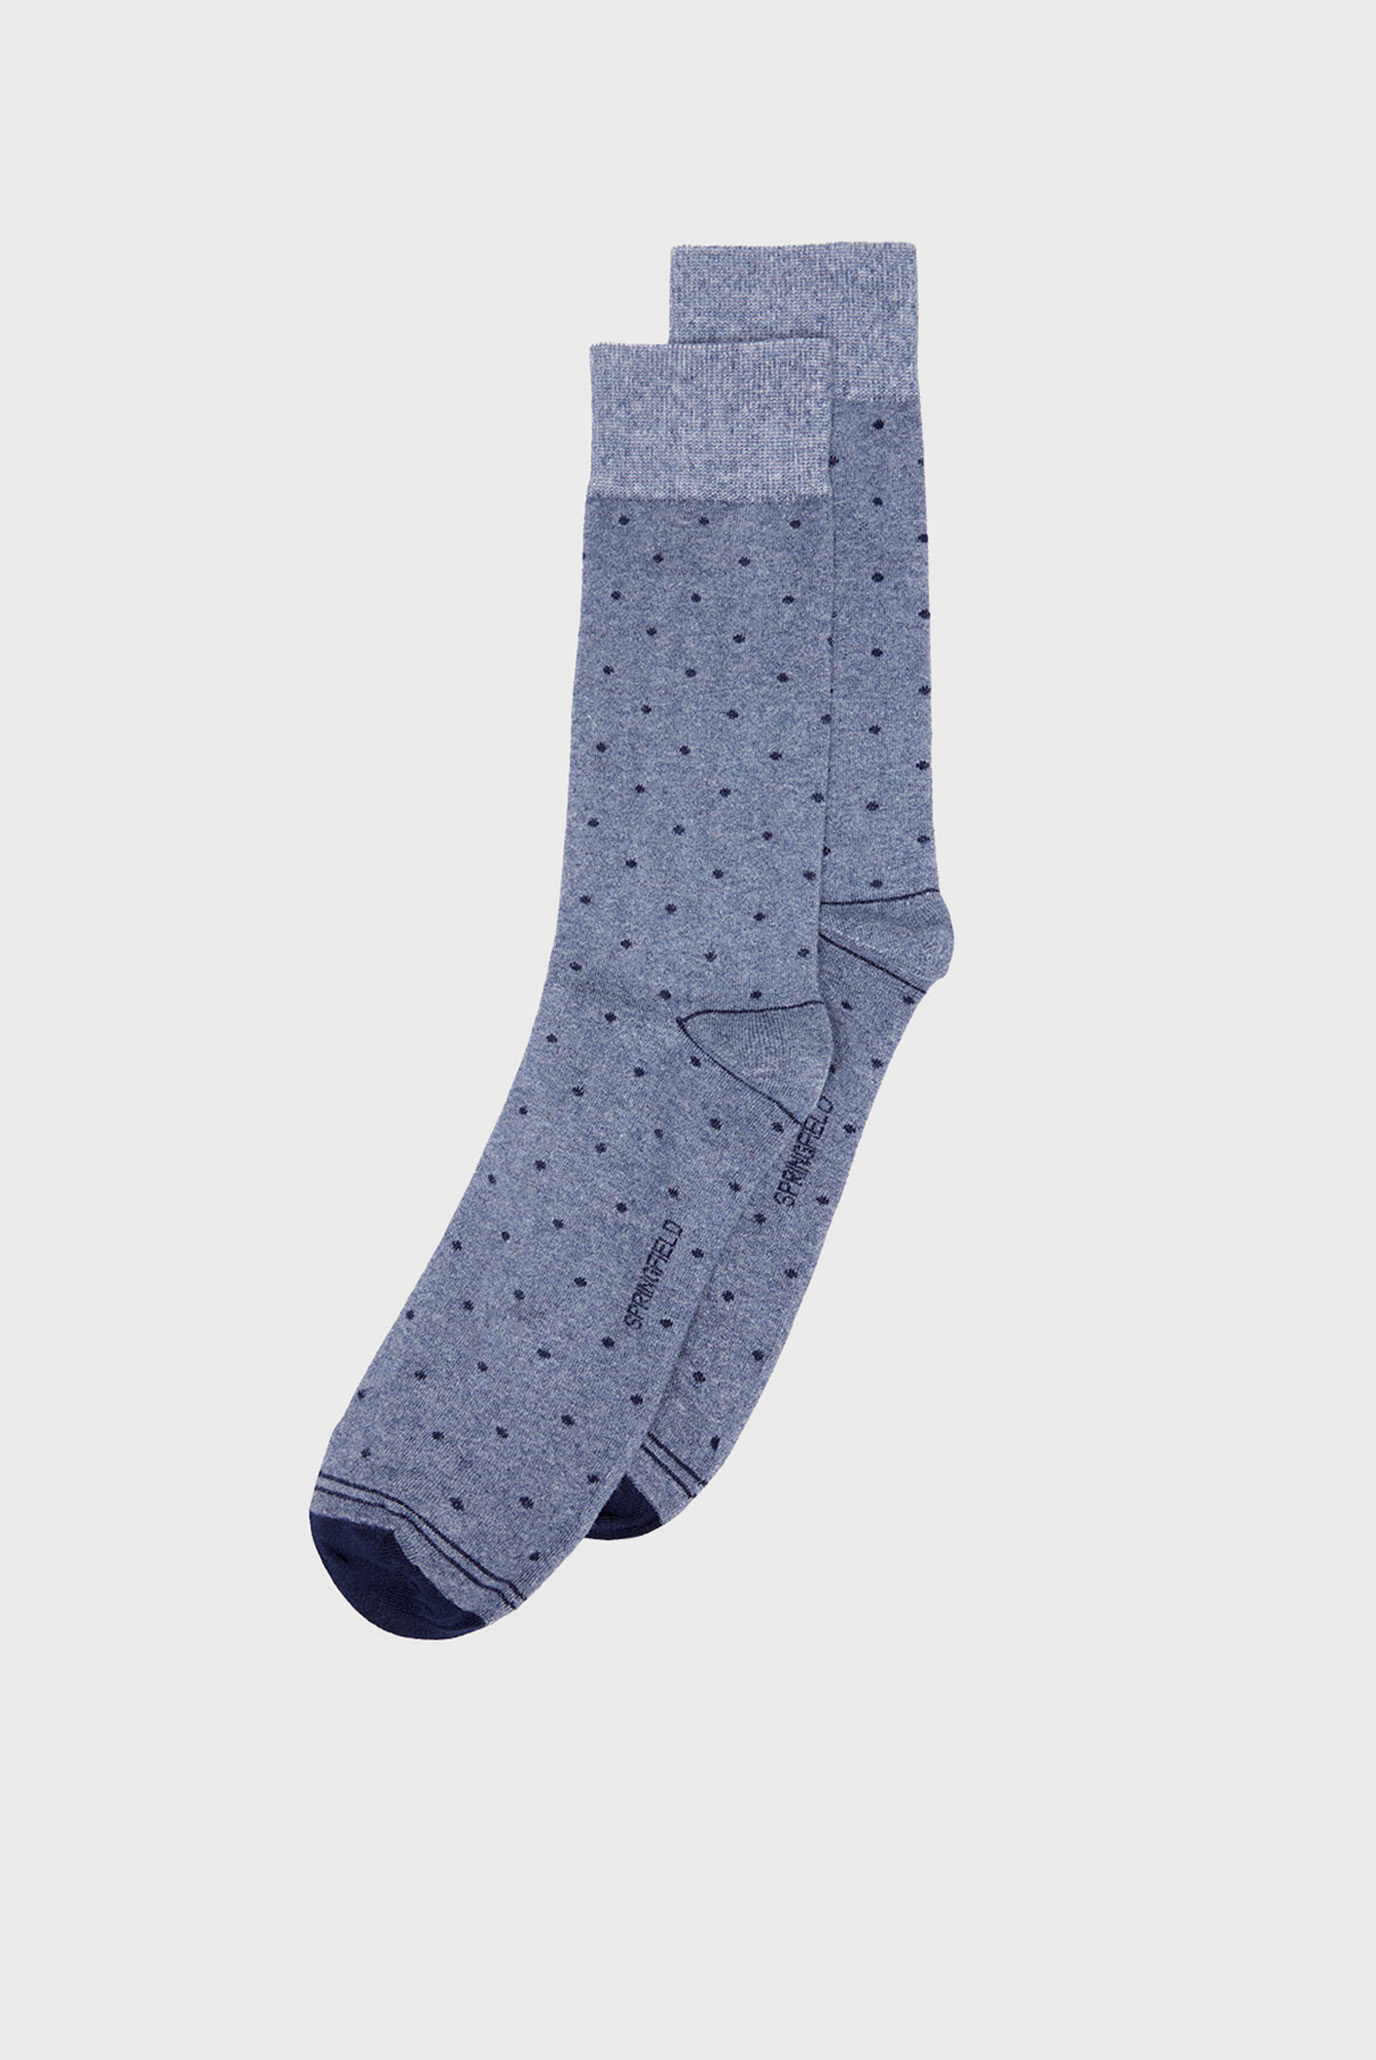 Мужские синие носки в горошек 1